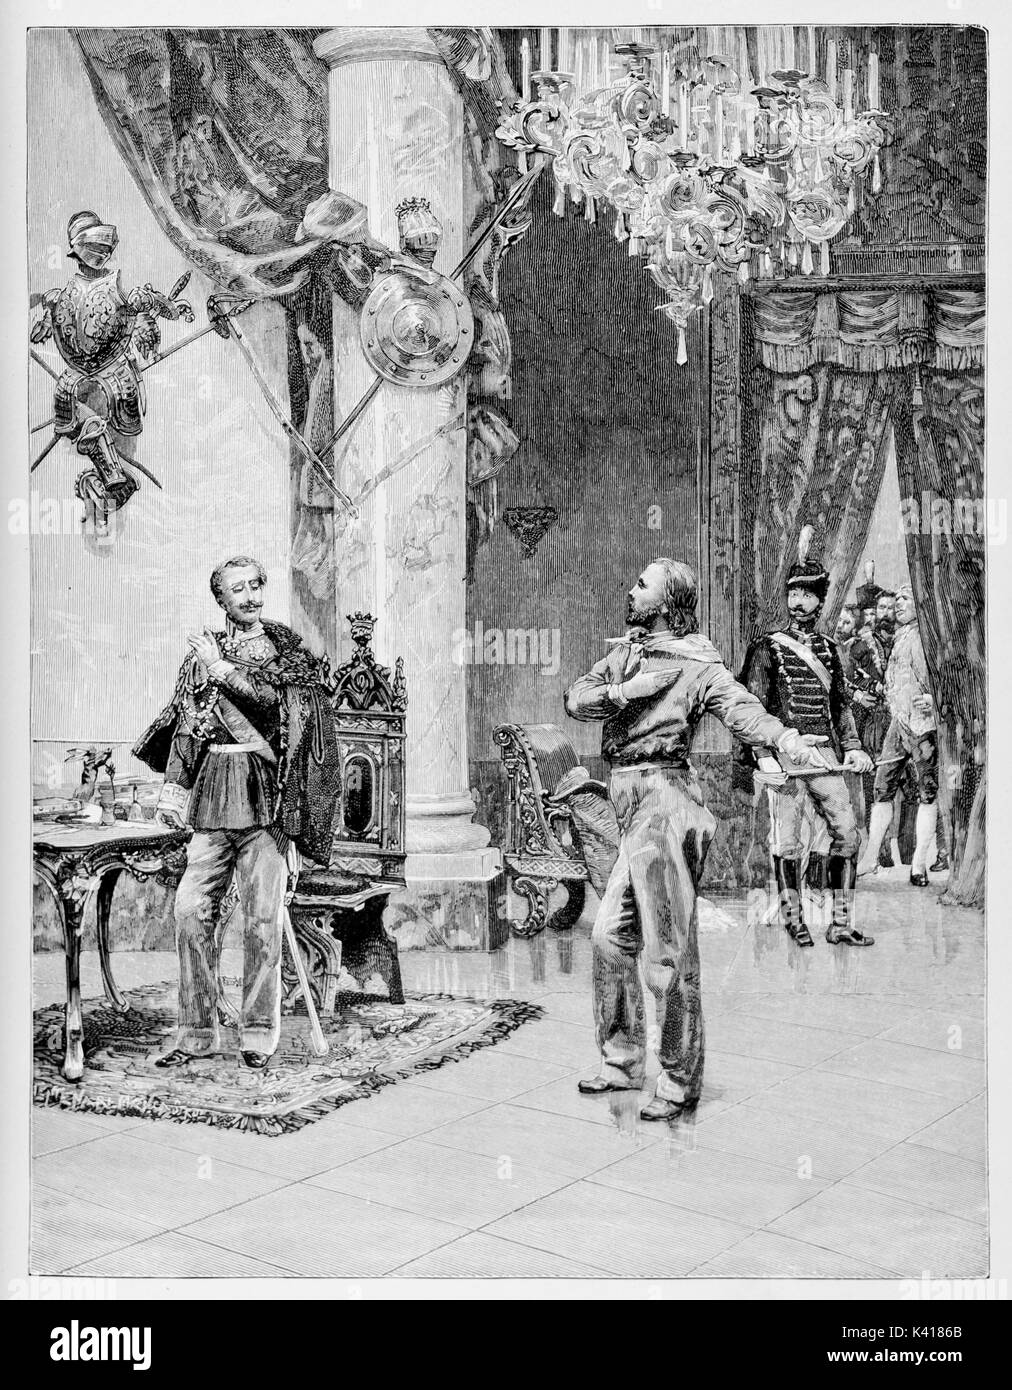 Garibaldi rencontre le roi Carlo Alberto dans un luxe royal hall avec un grand lustre chrystal. Par E. Matania publié le Garibaldi e i suoi Tempi Milan Italie1884Garibaldi et Carlo Alberto Banque D'Images